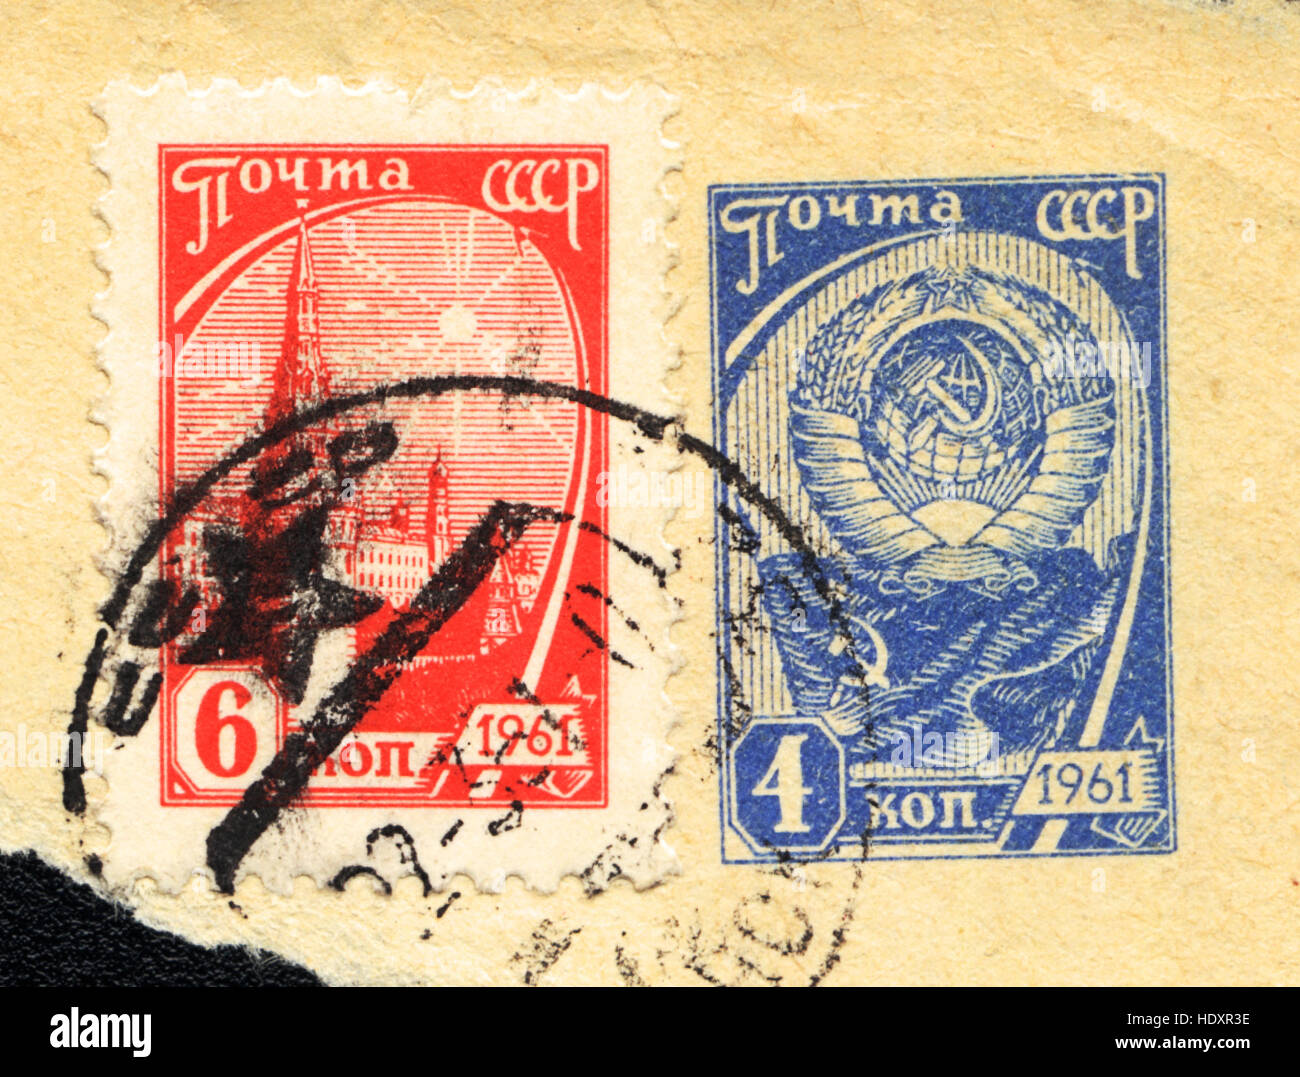 Postage stamp printed in USSR  shows Soviet symbols - the Kremlin, Flag and Emblem,  1961 Stock Photo